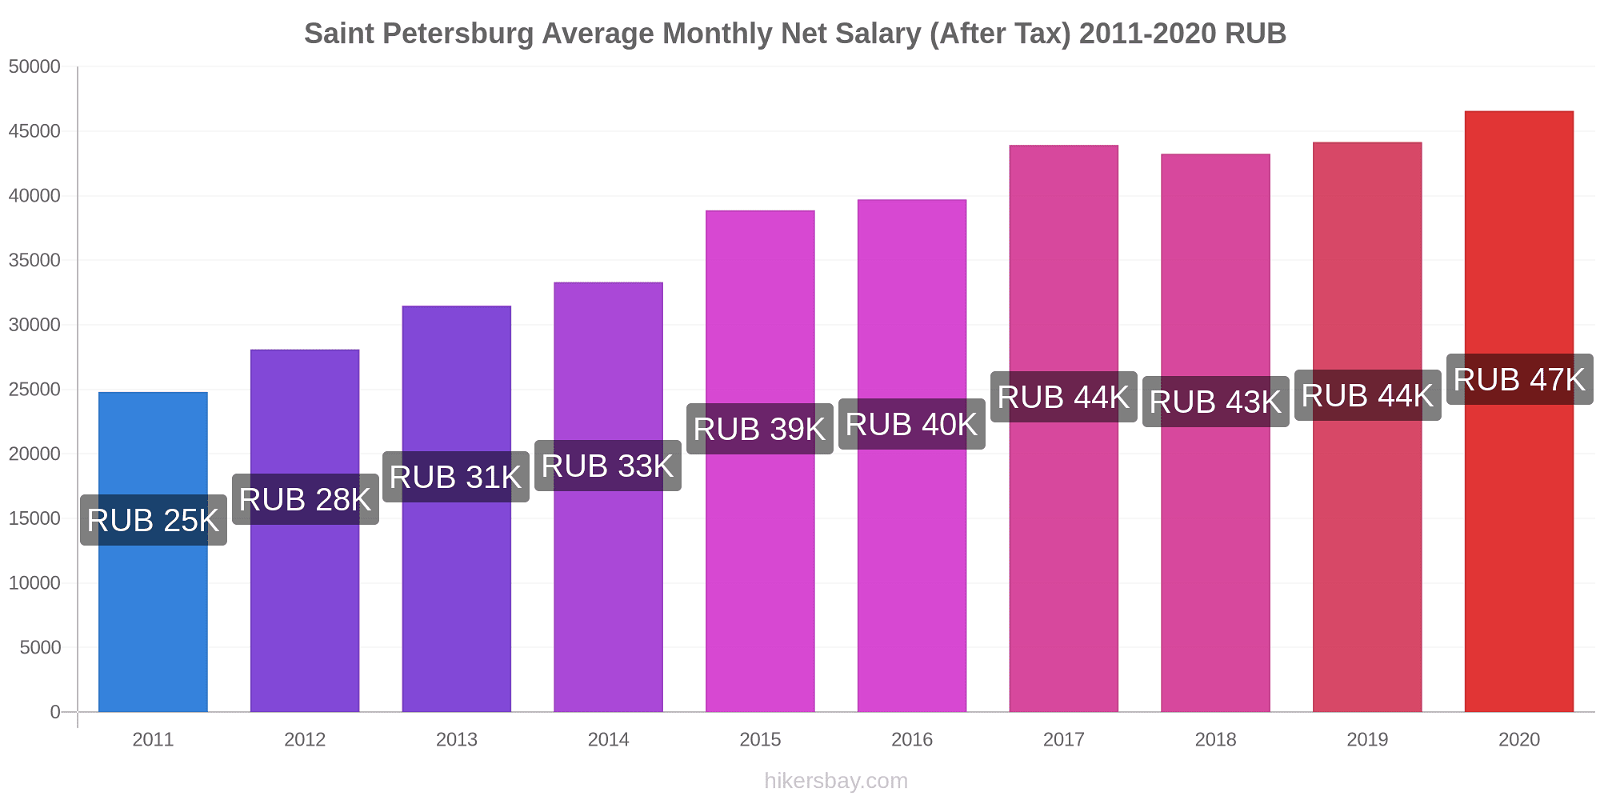 Saint Petersburg price changes Average Monthly Net Salary (After Tax) hikersbay.com